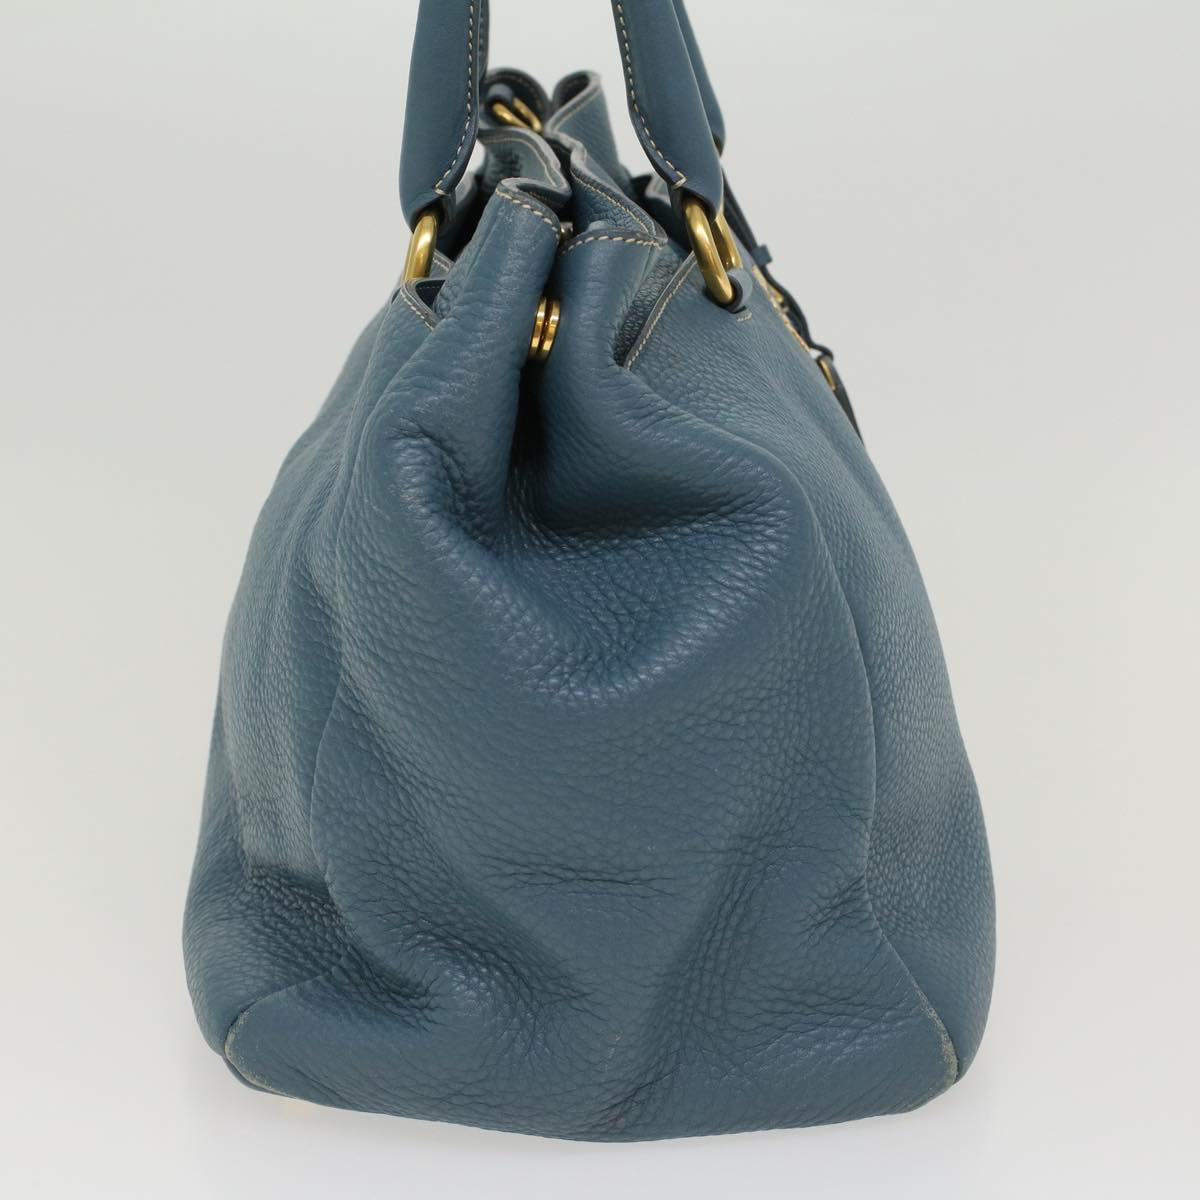 PRADA Hand Bag Leather 2way Shoulder Bag Blue Auth am4466